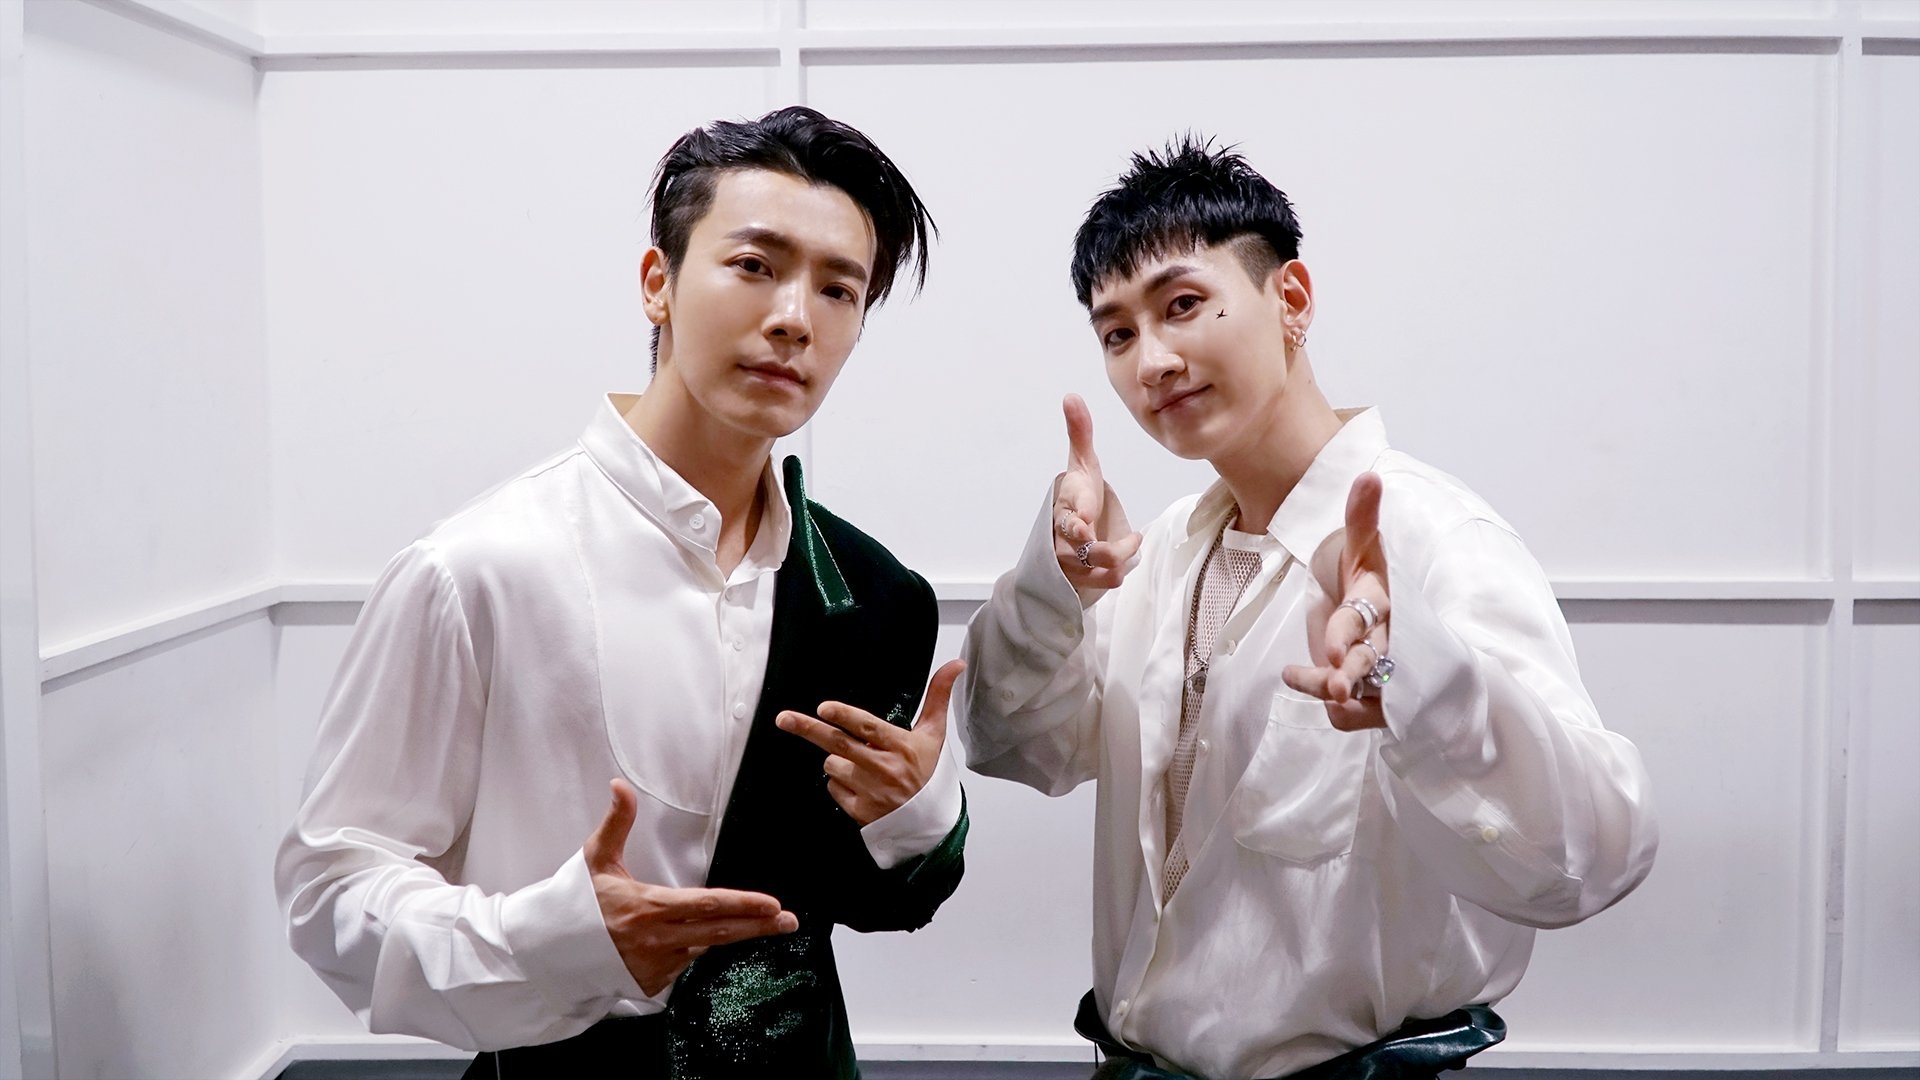 Donghae and Eunhyuk - Super Junior Wallpaper 42758504 - Fanpop 1920x1080